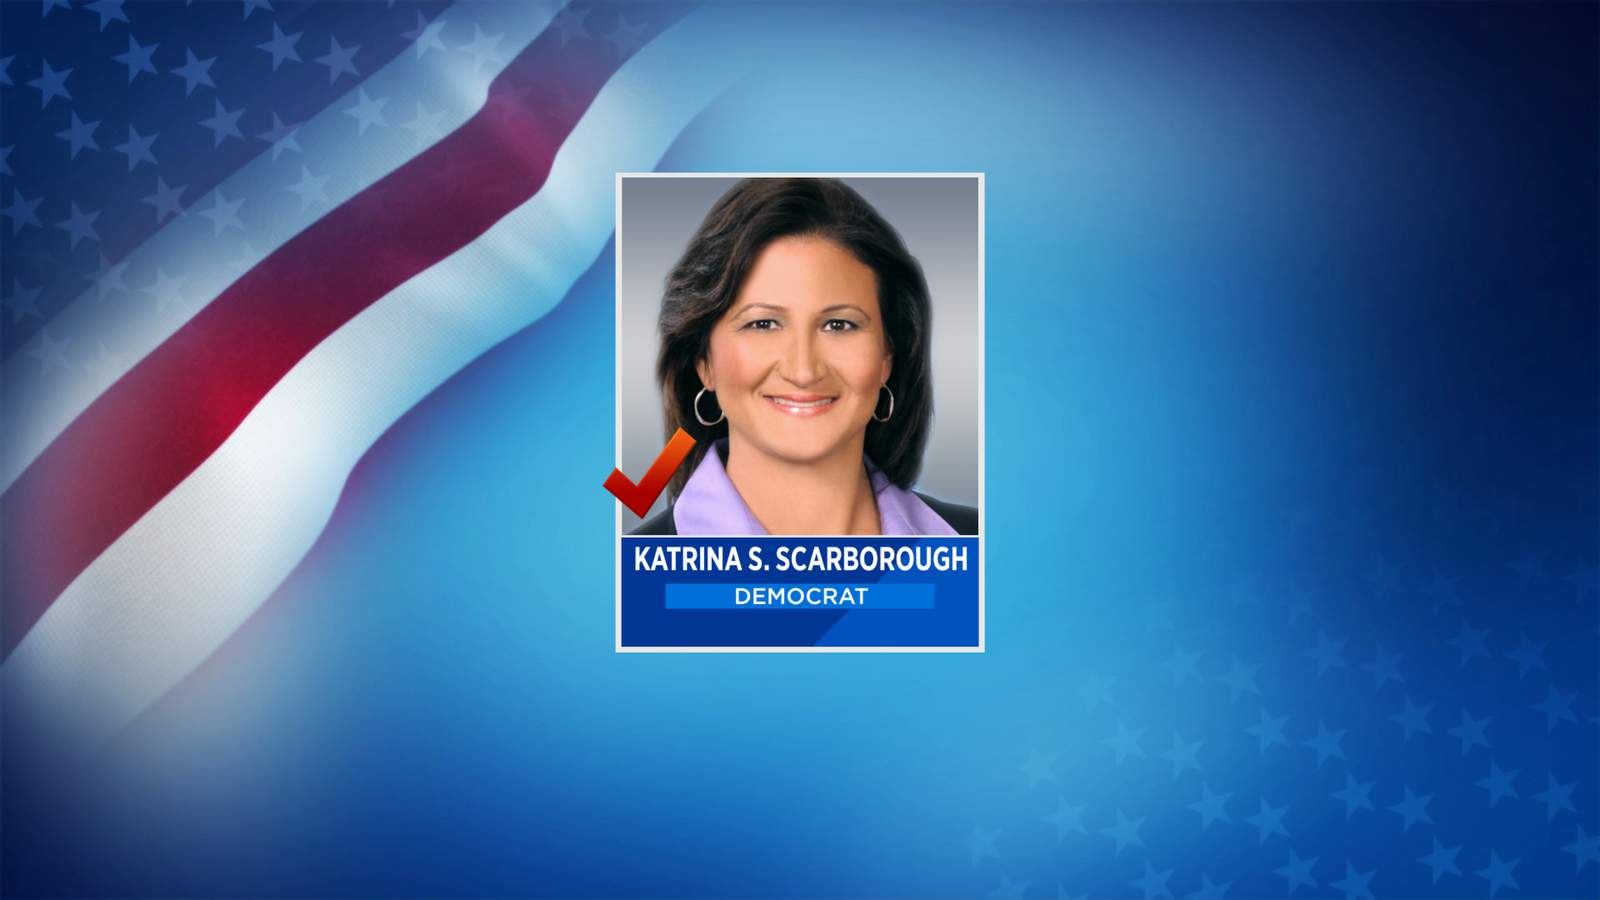 Osceola County Property Appraiser Katrina S. Scarborough wins re-election